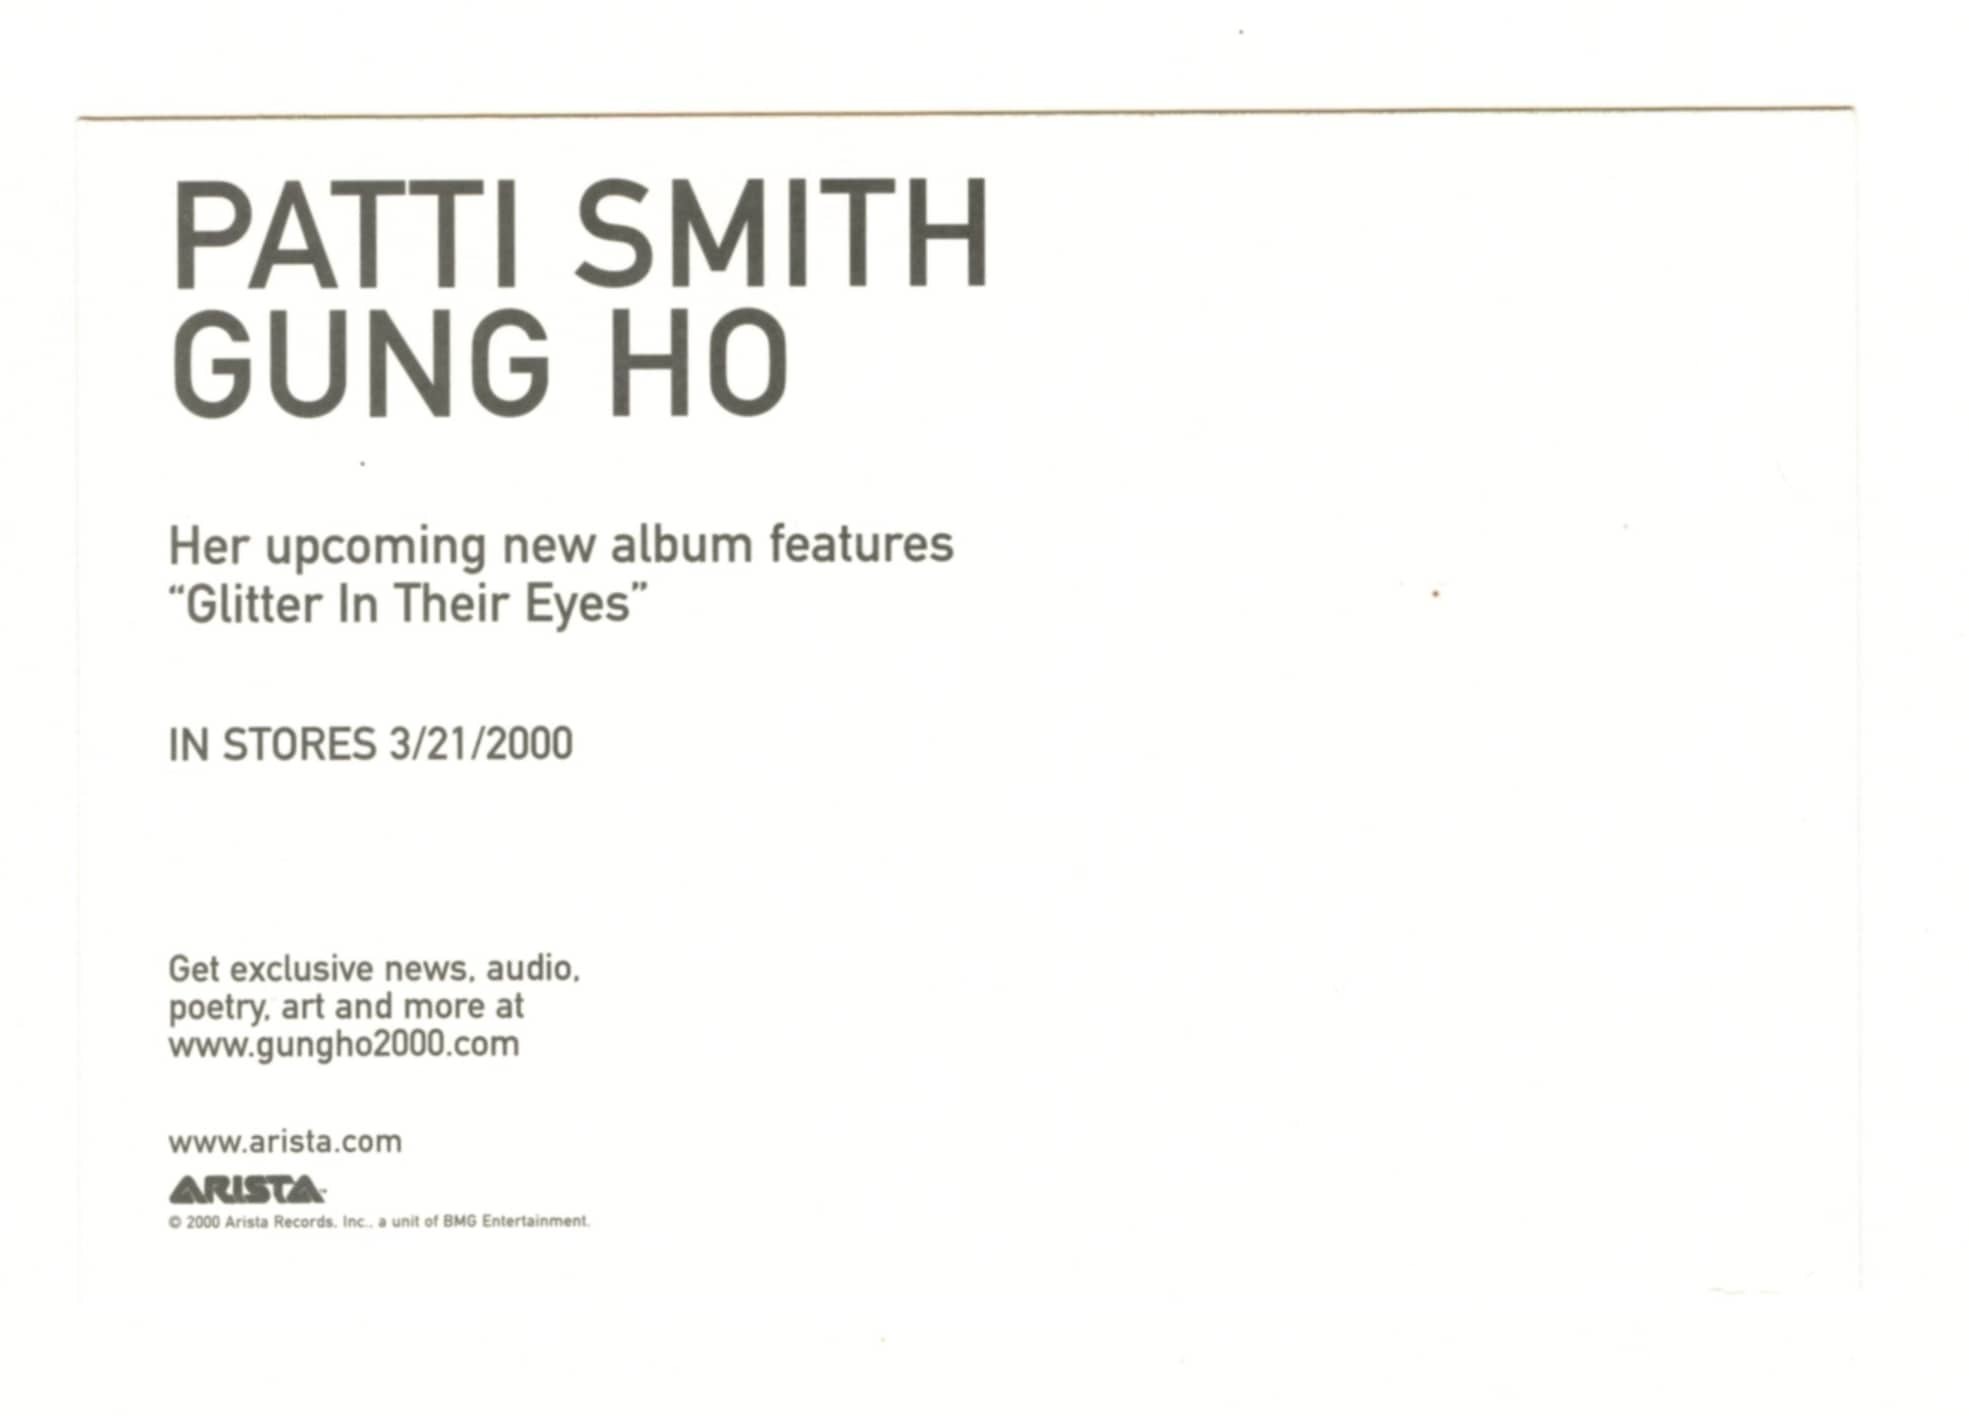 Patti Smith Postcard Gun Ho Album Promotion 2000 Arista Records